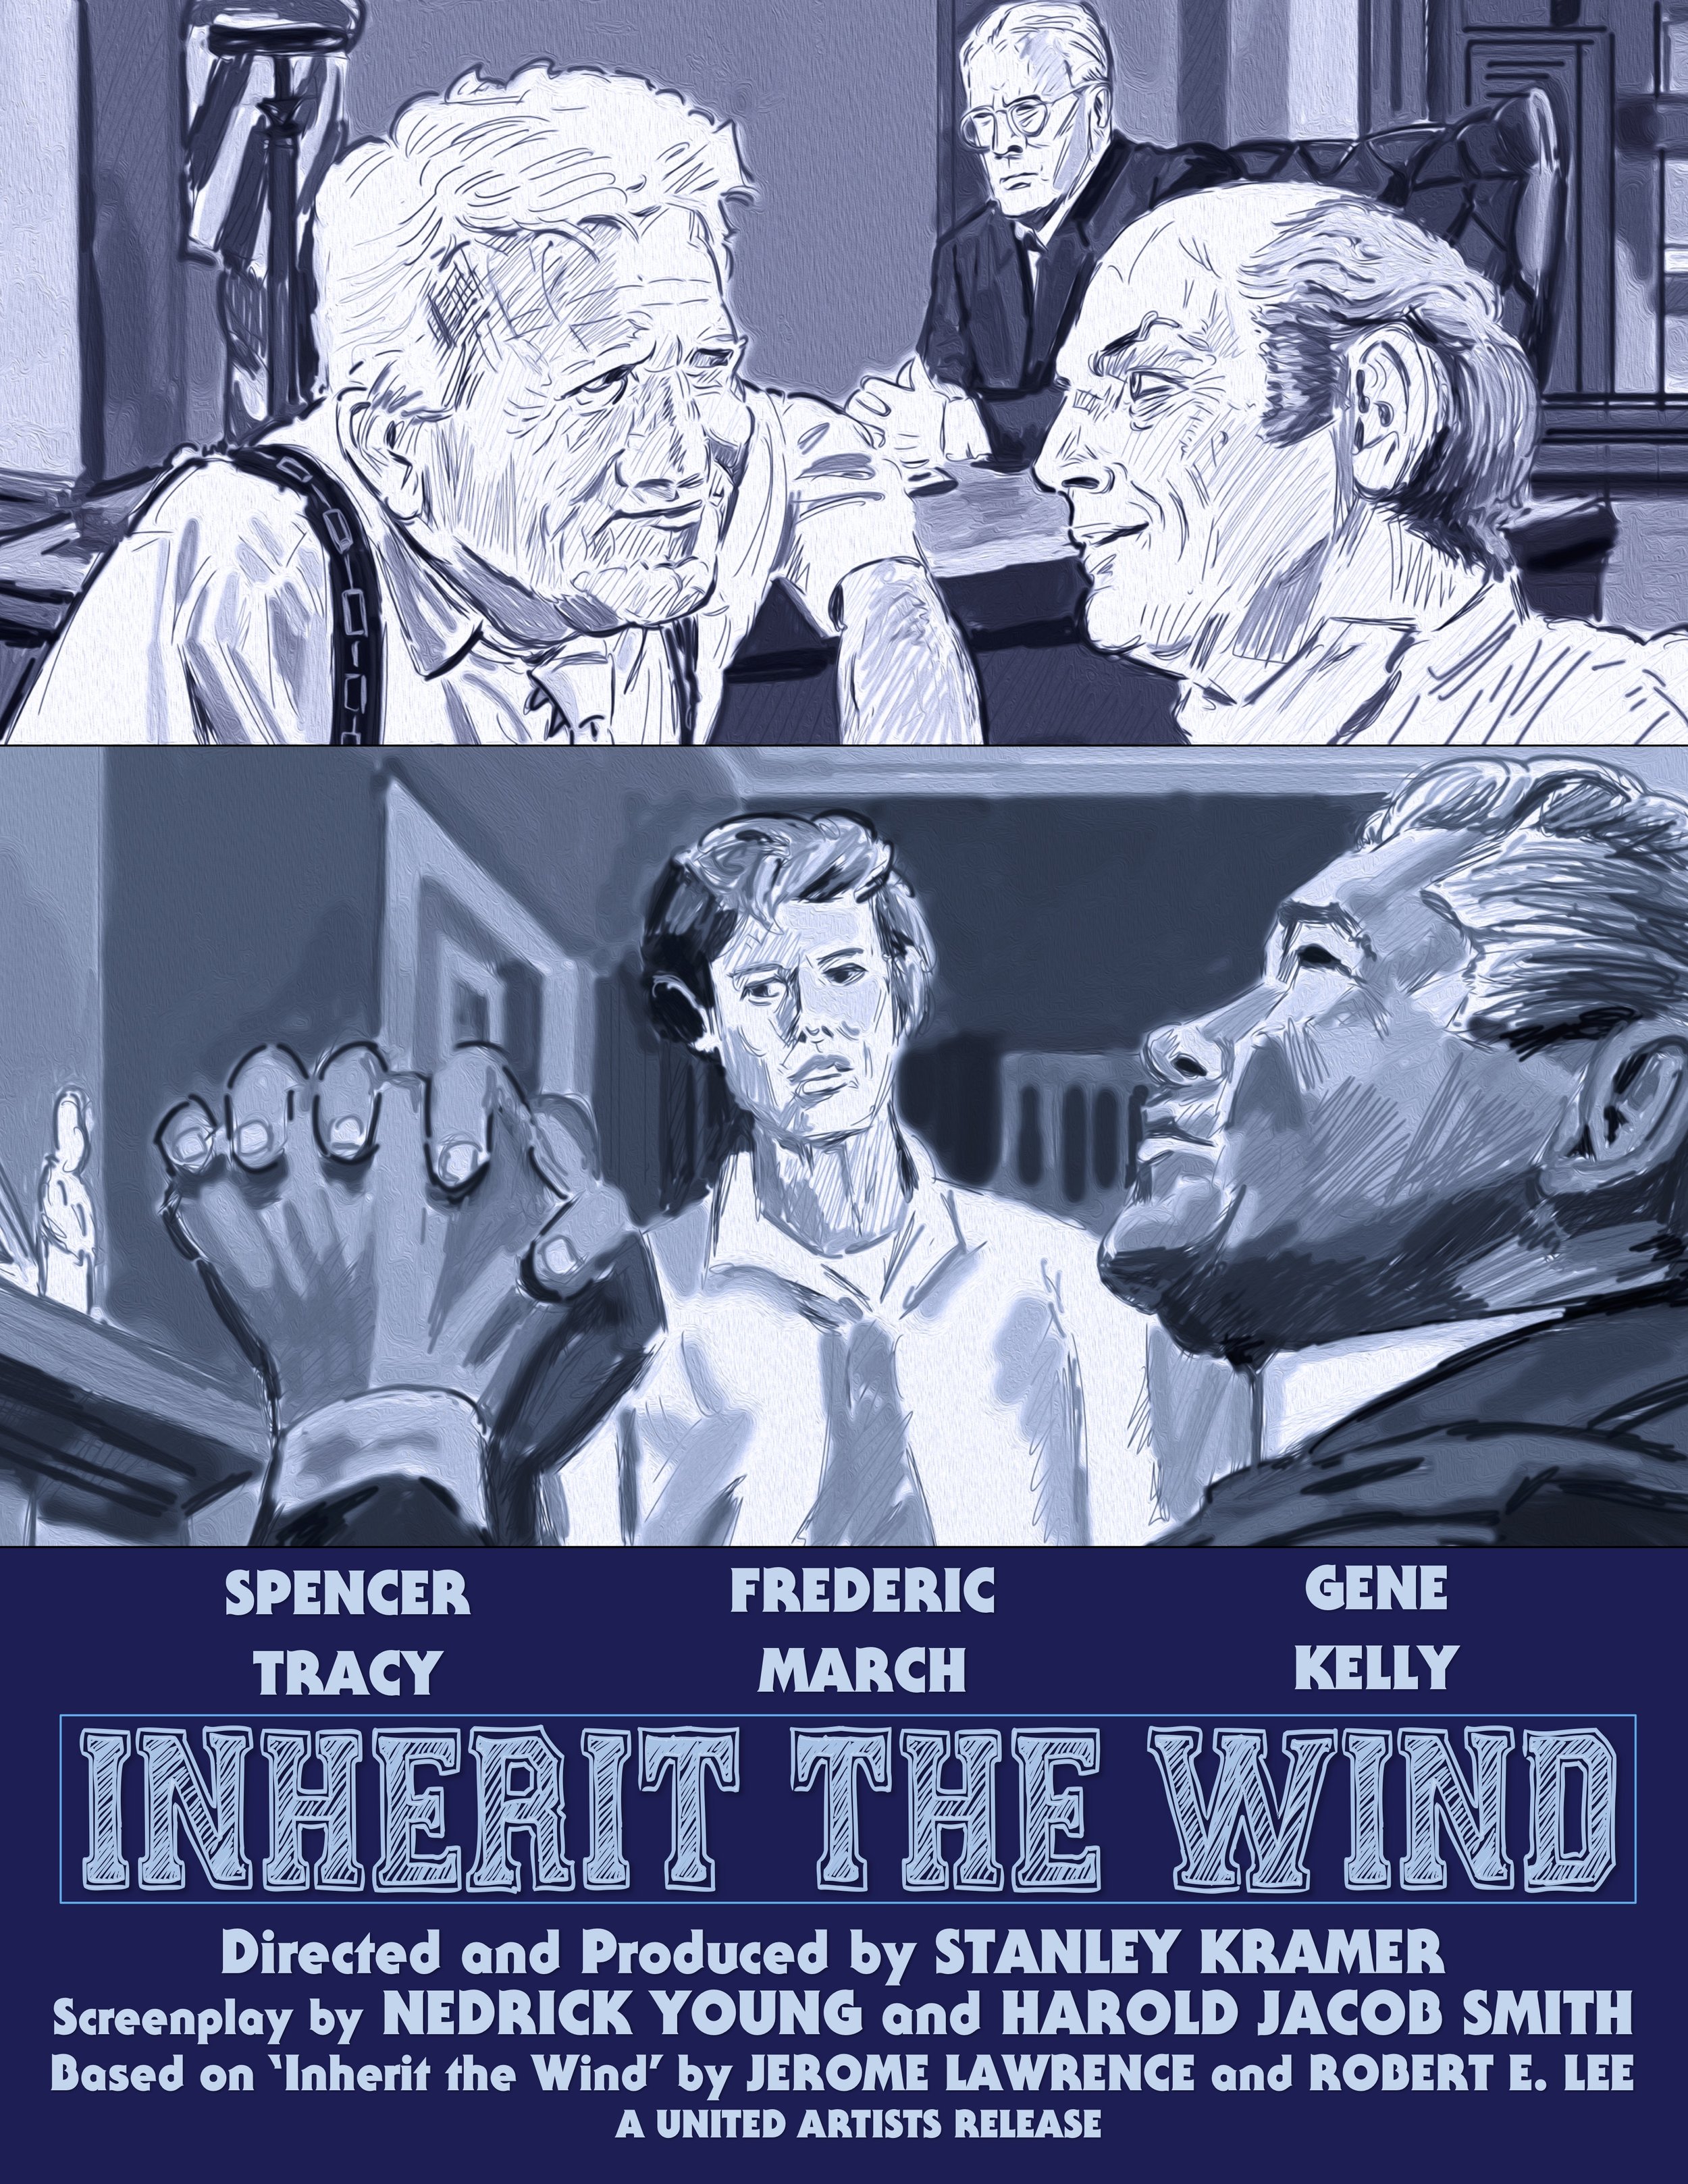 Inherit the Wind (1960)